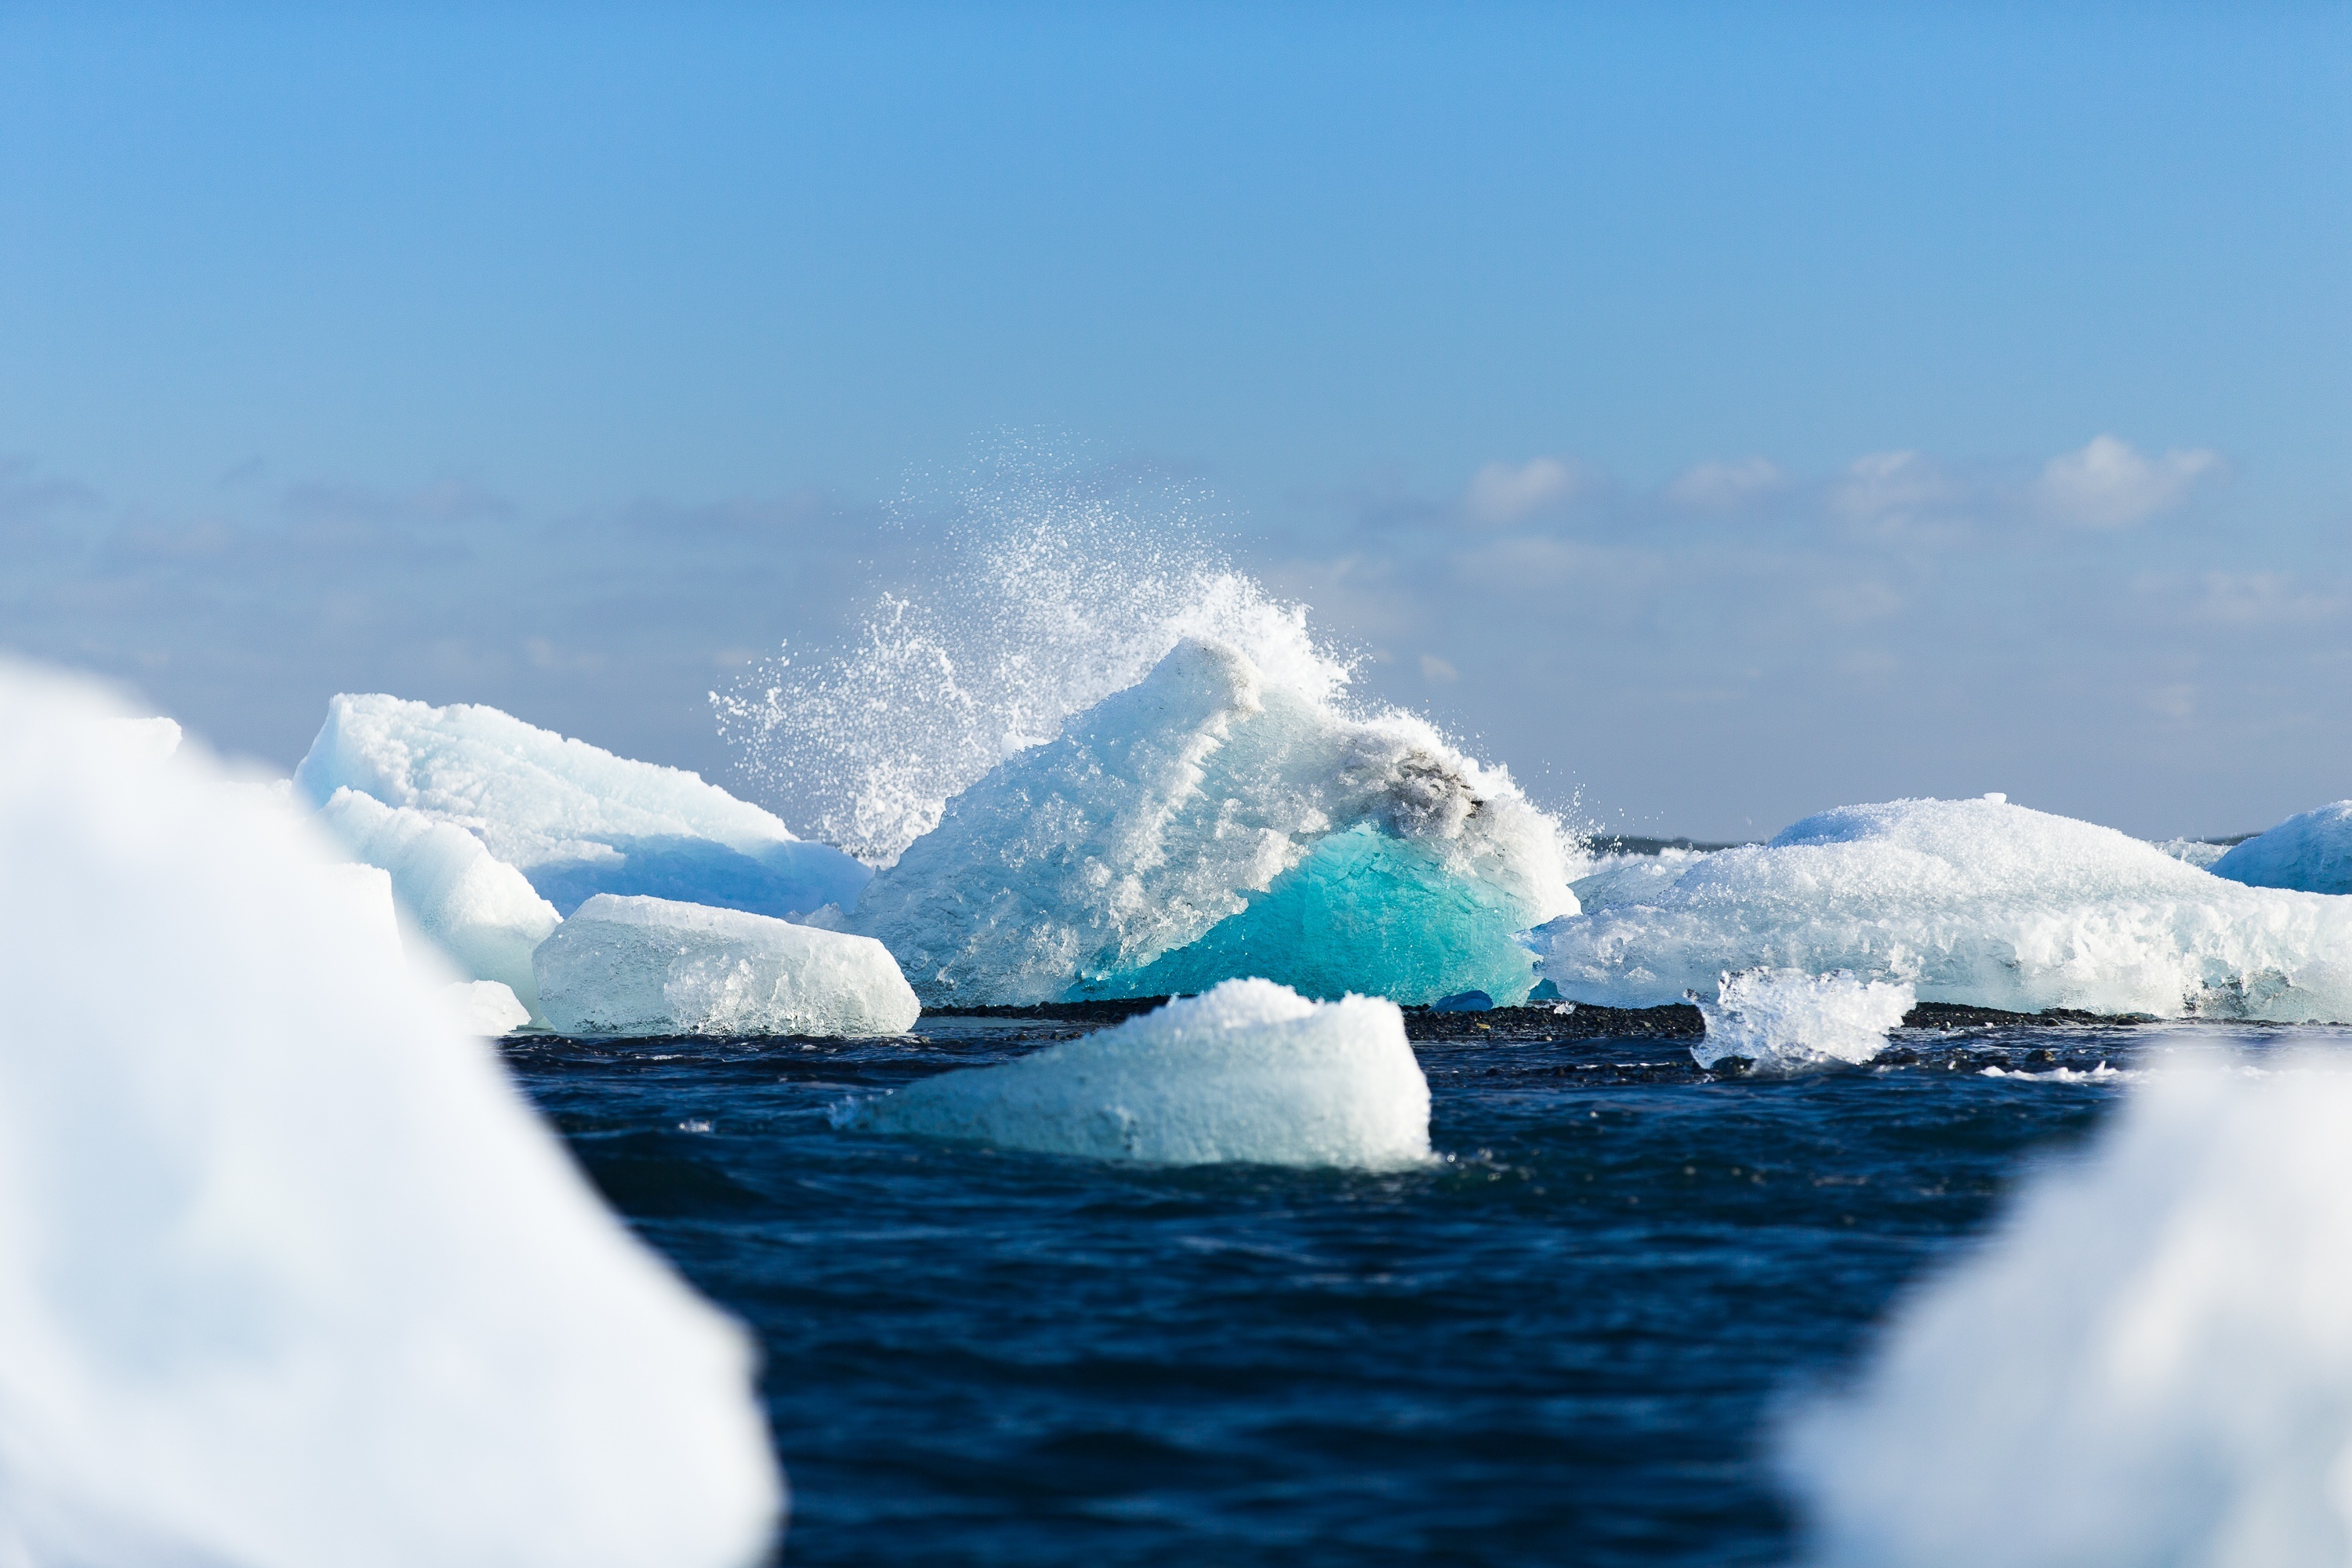 Скачать обои бесплатно Арктика, Природа, Снег, Айсберг, Лед картинка на рабочий стол ПК